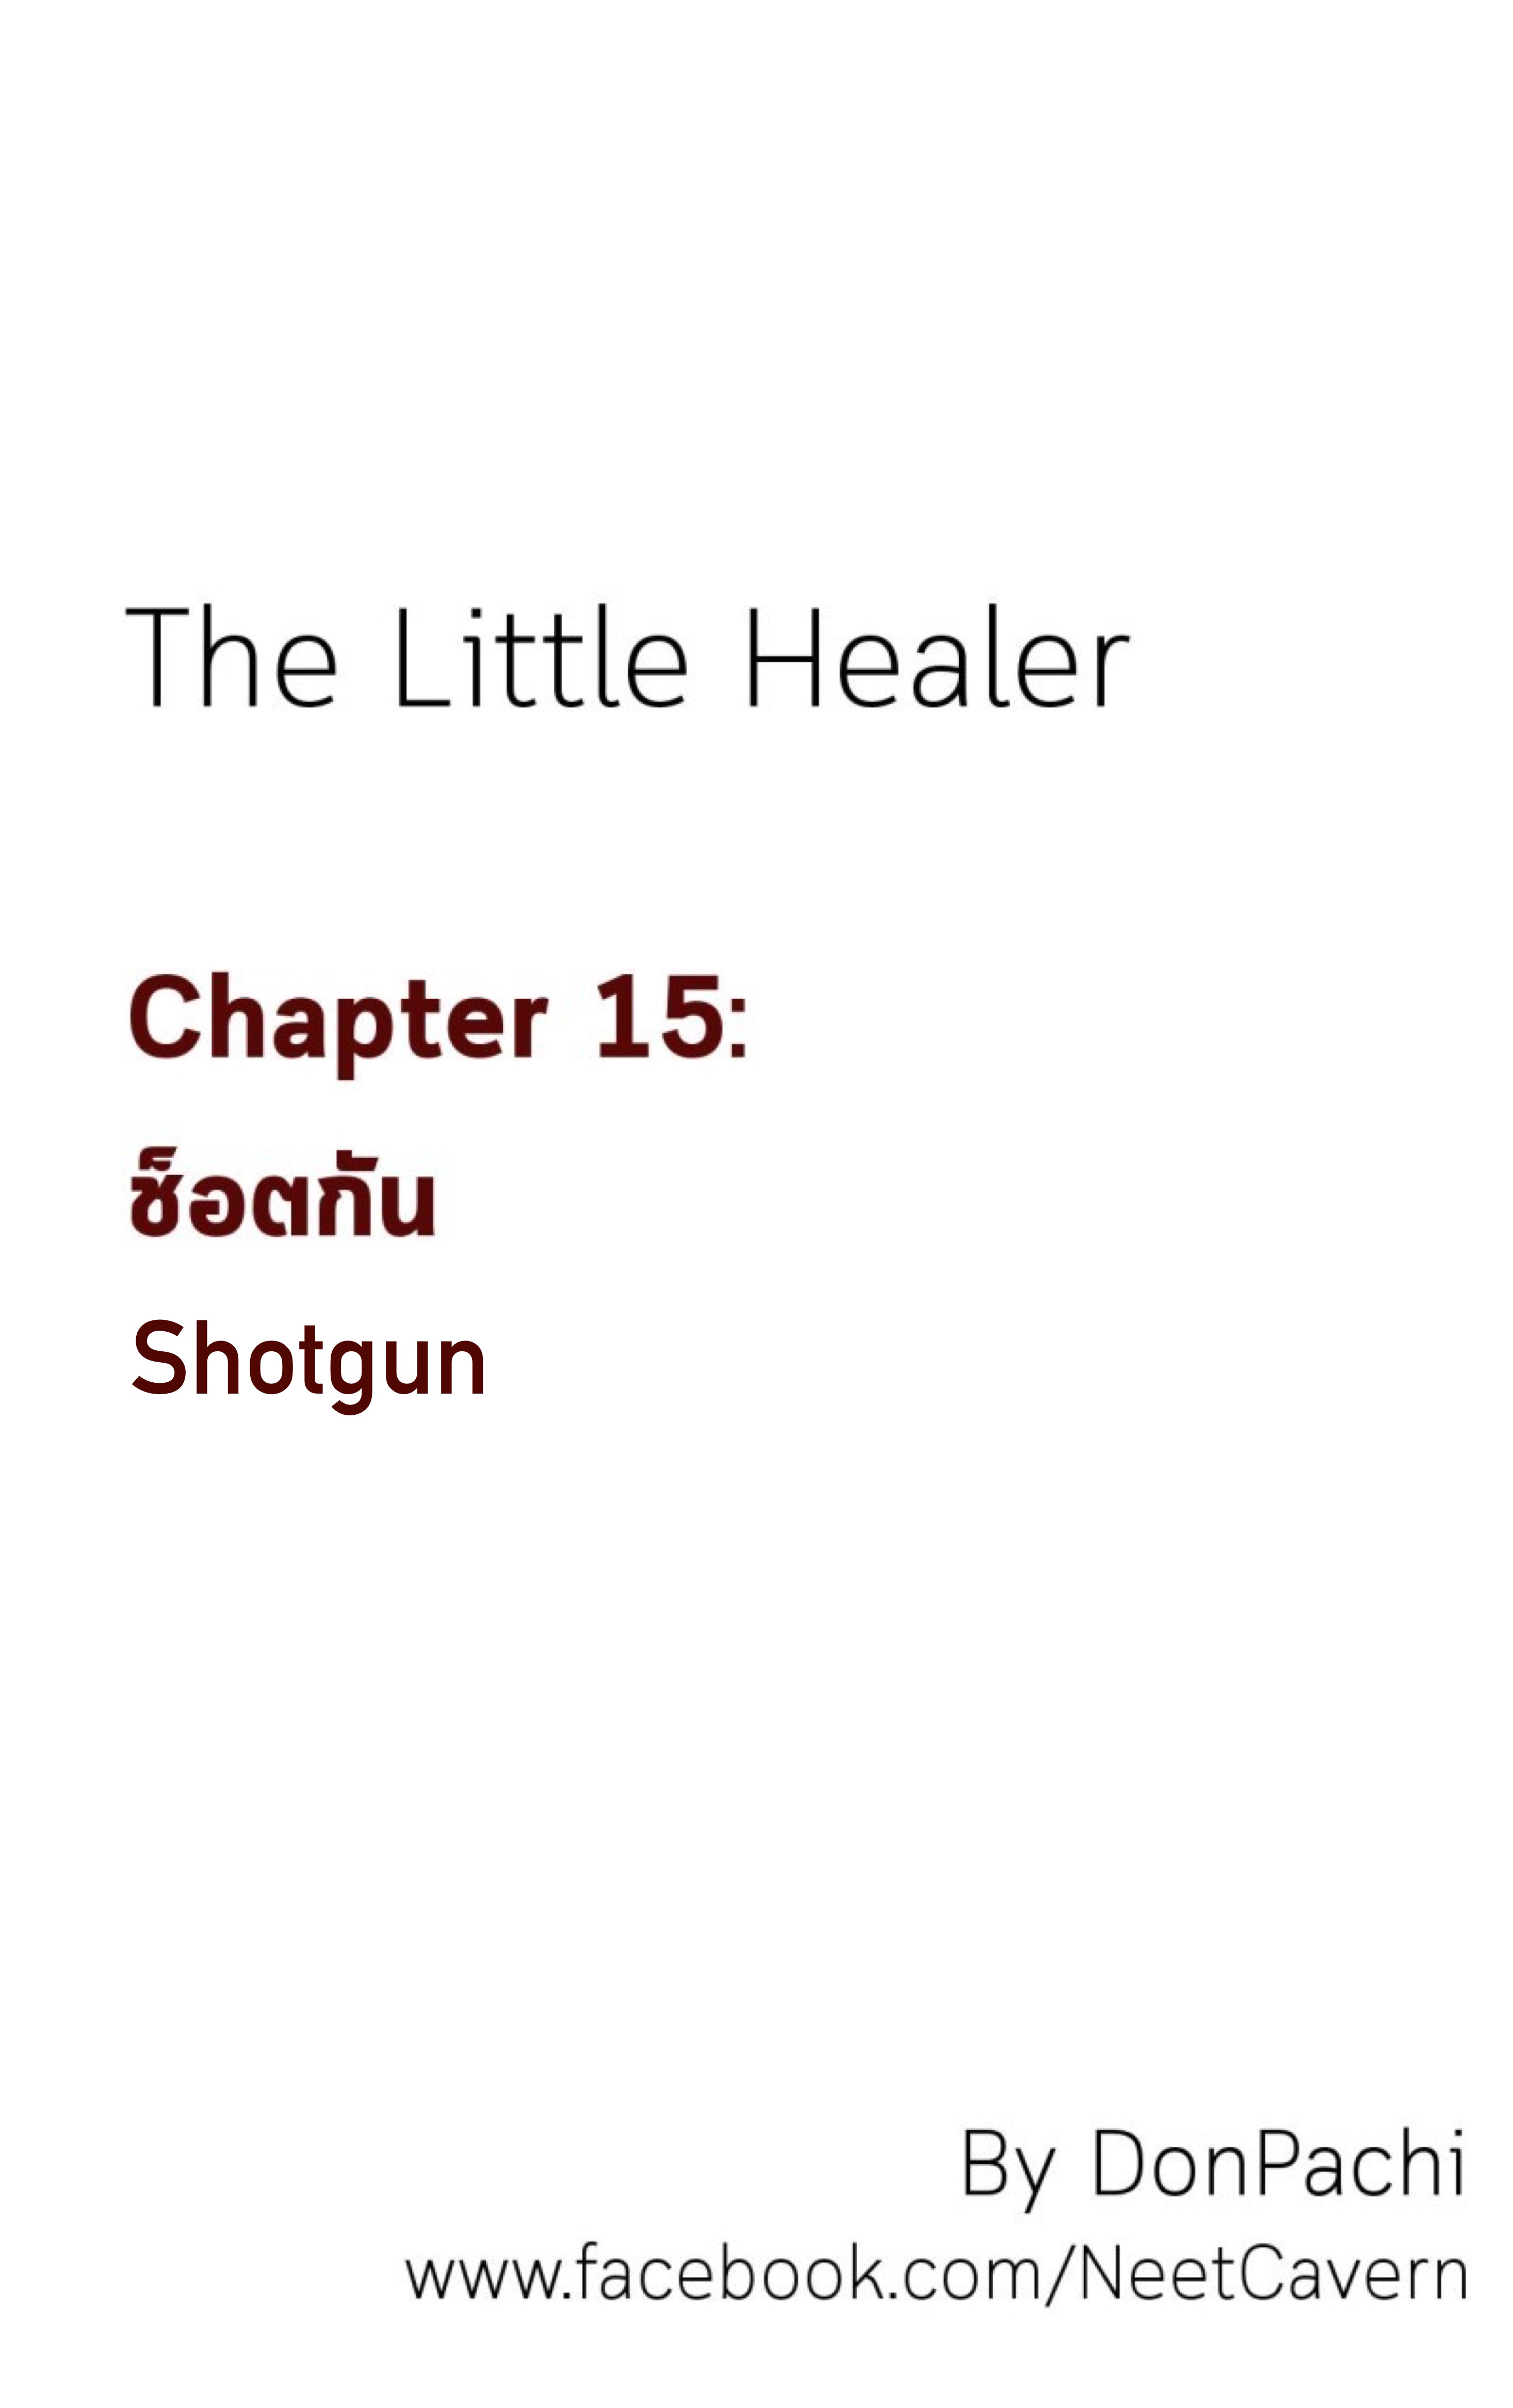 The Little Healer Chapter 15: Shotgun - Picture 2